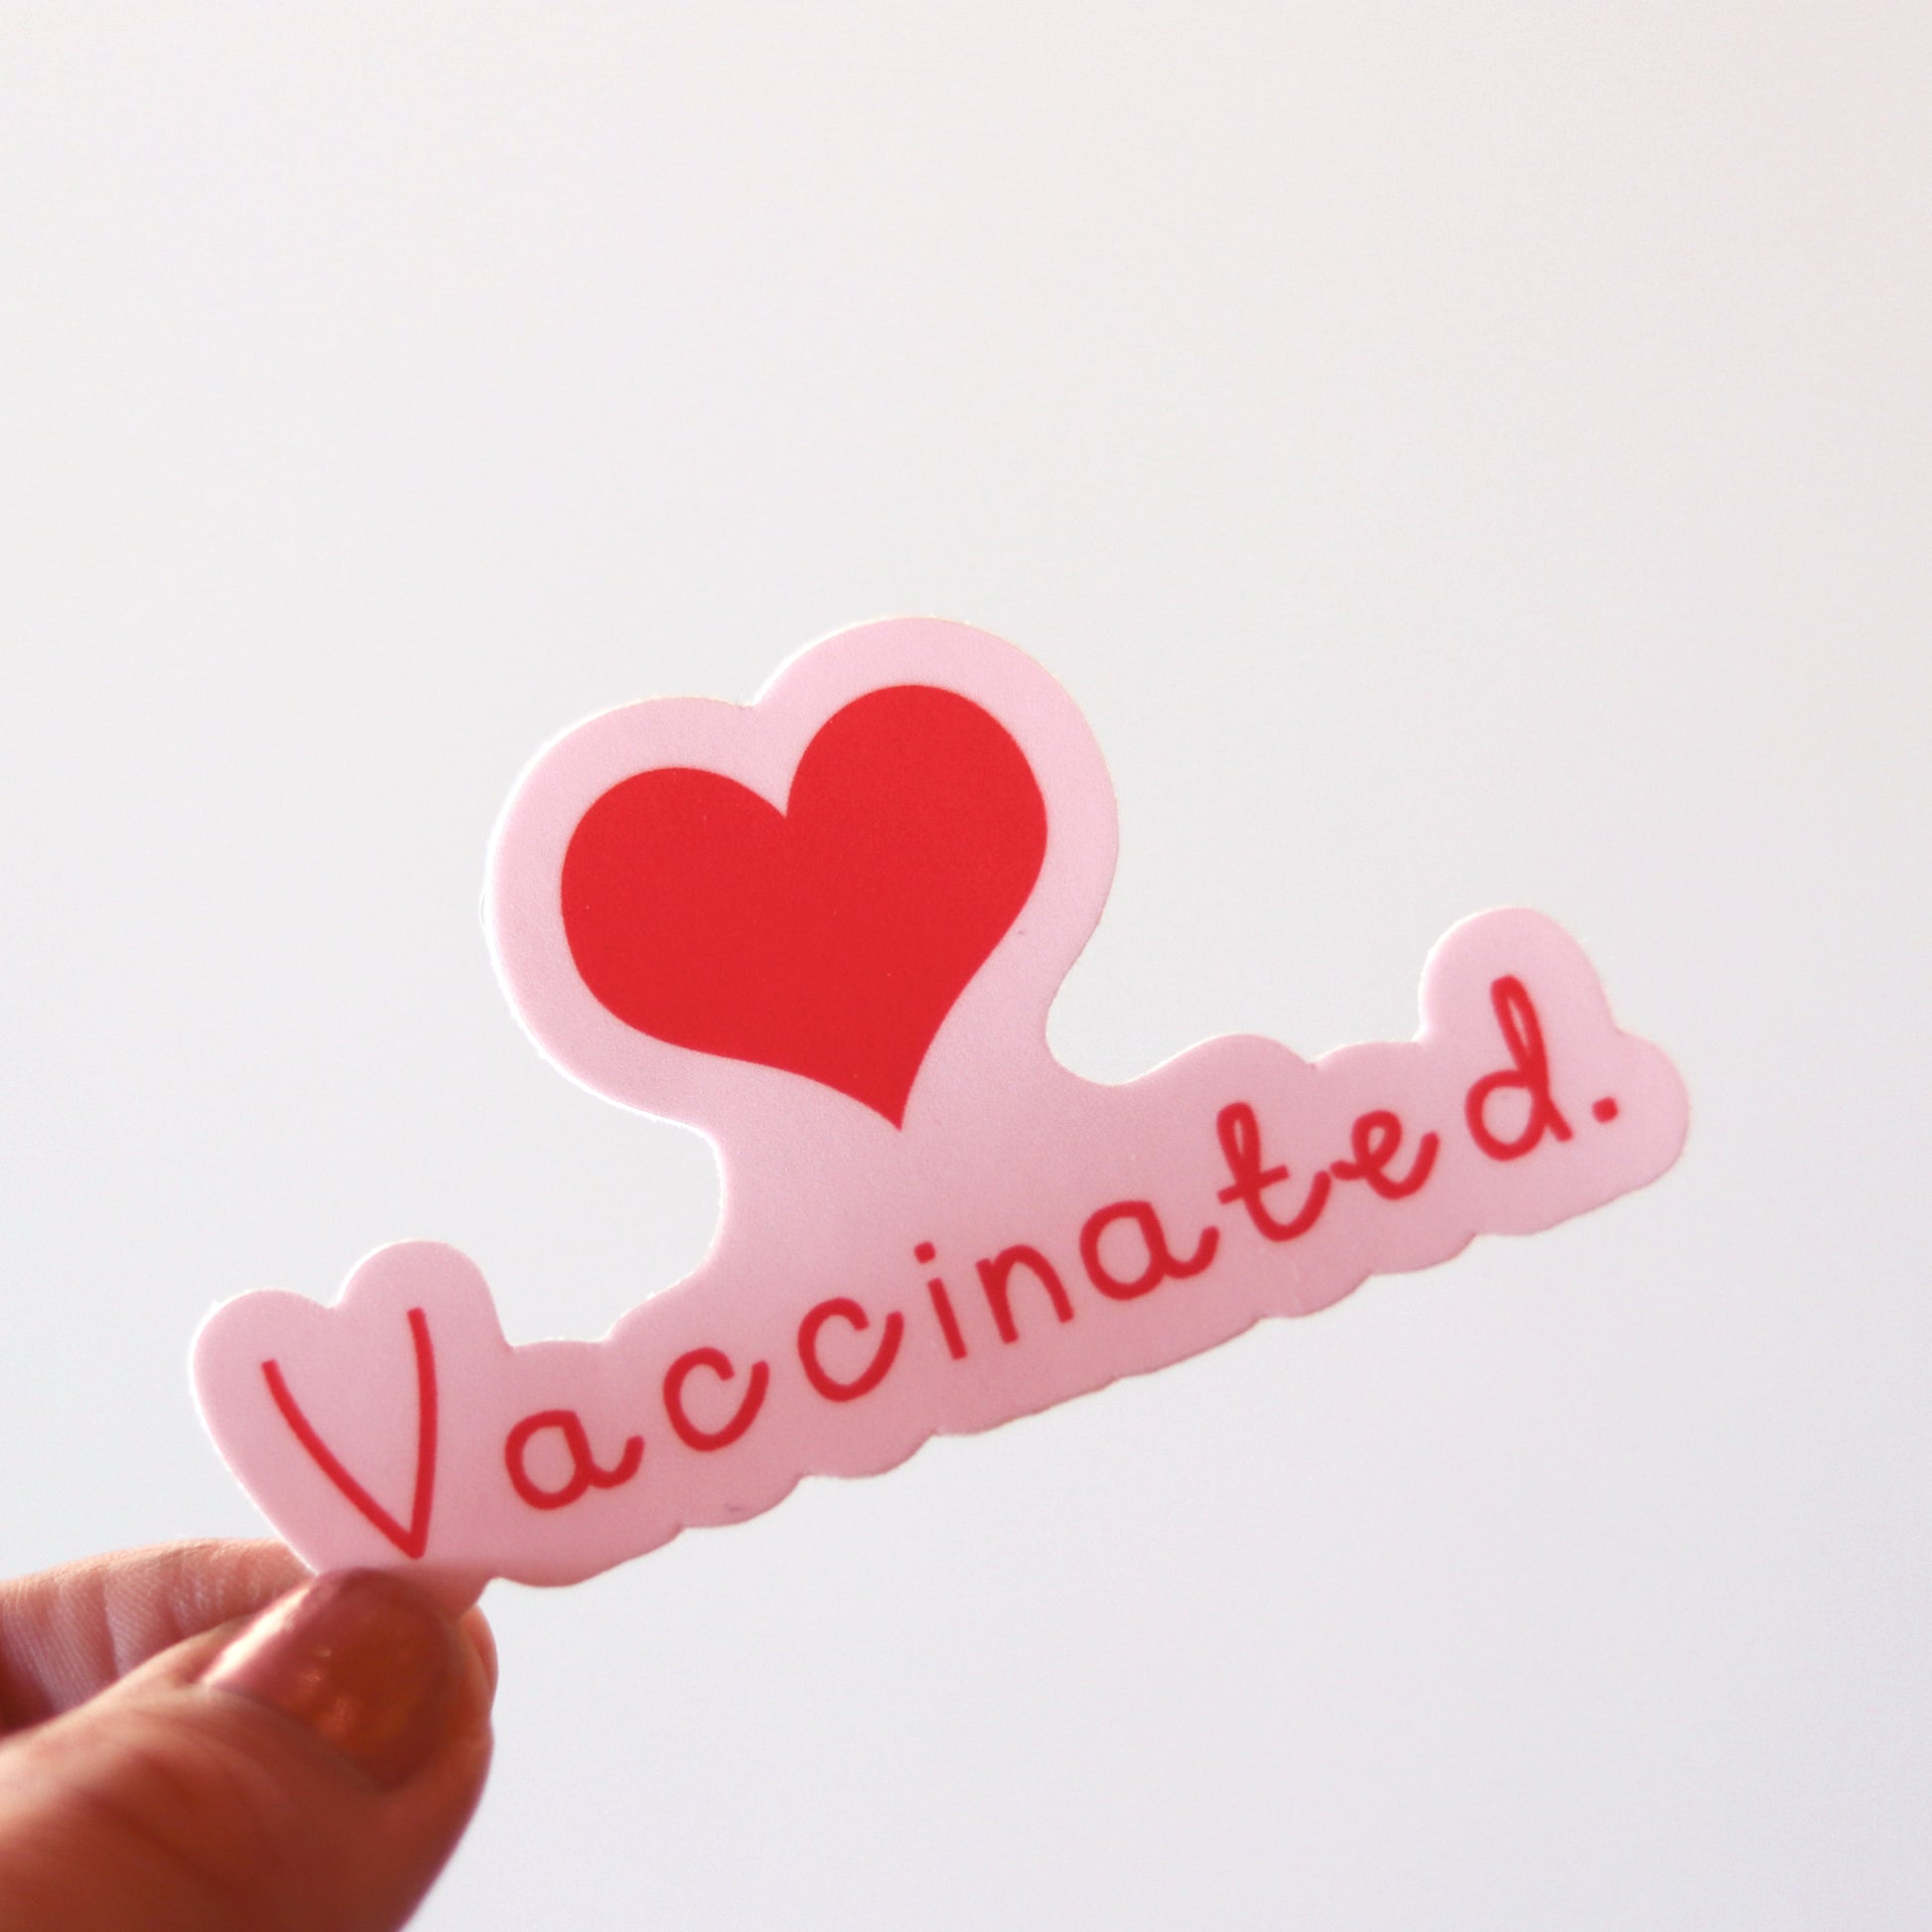 Vaccinated Heart Sticker